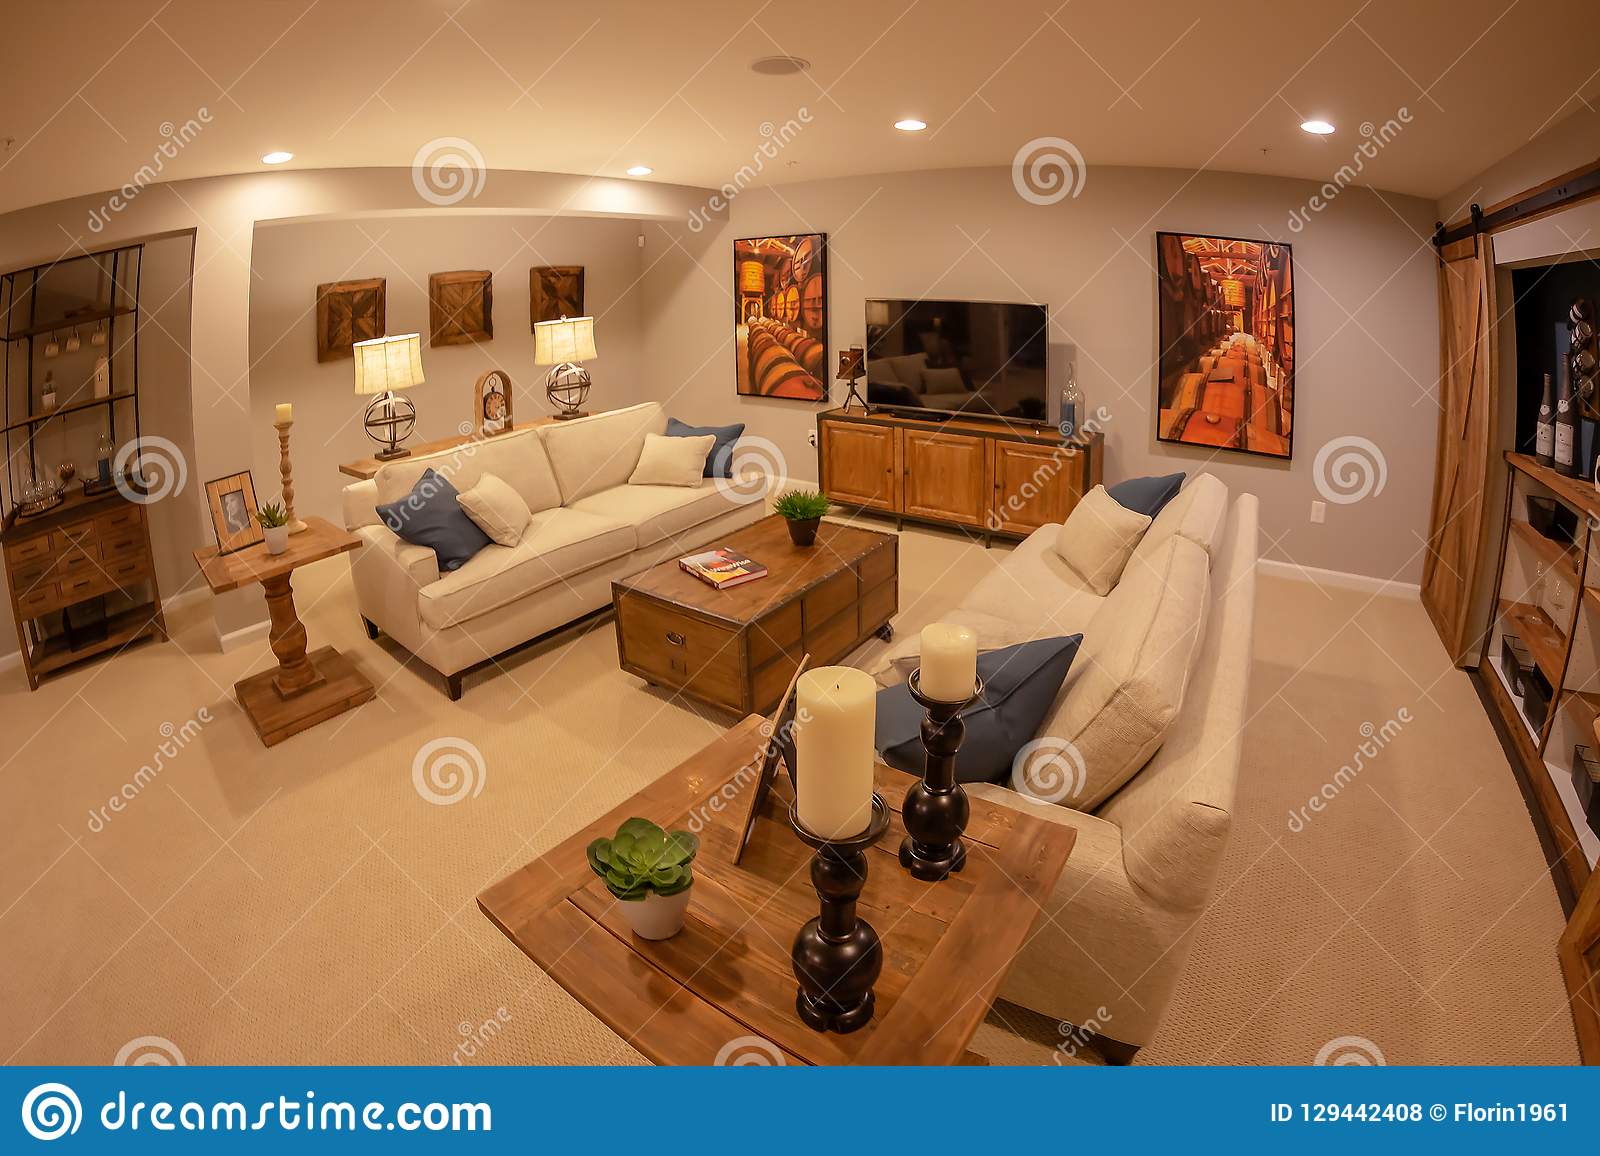 interior-american-homes-maryland-usa-september-relaxation-room-129442408.jpg